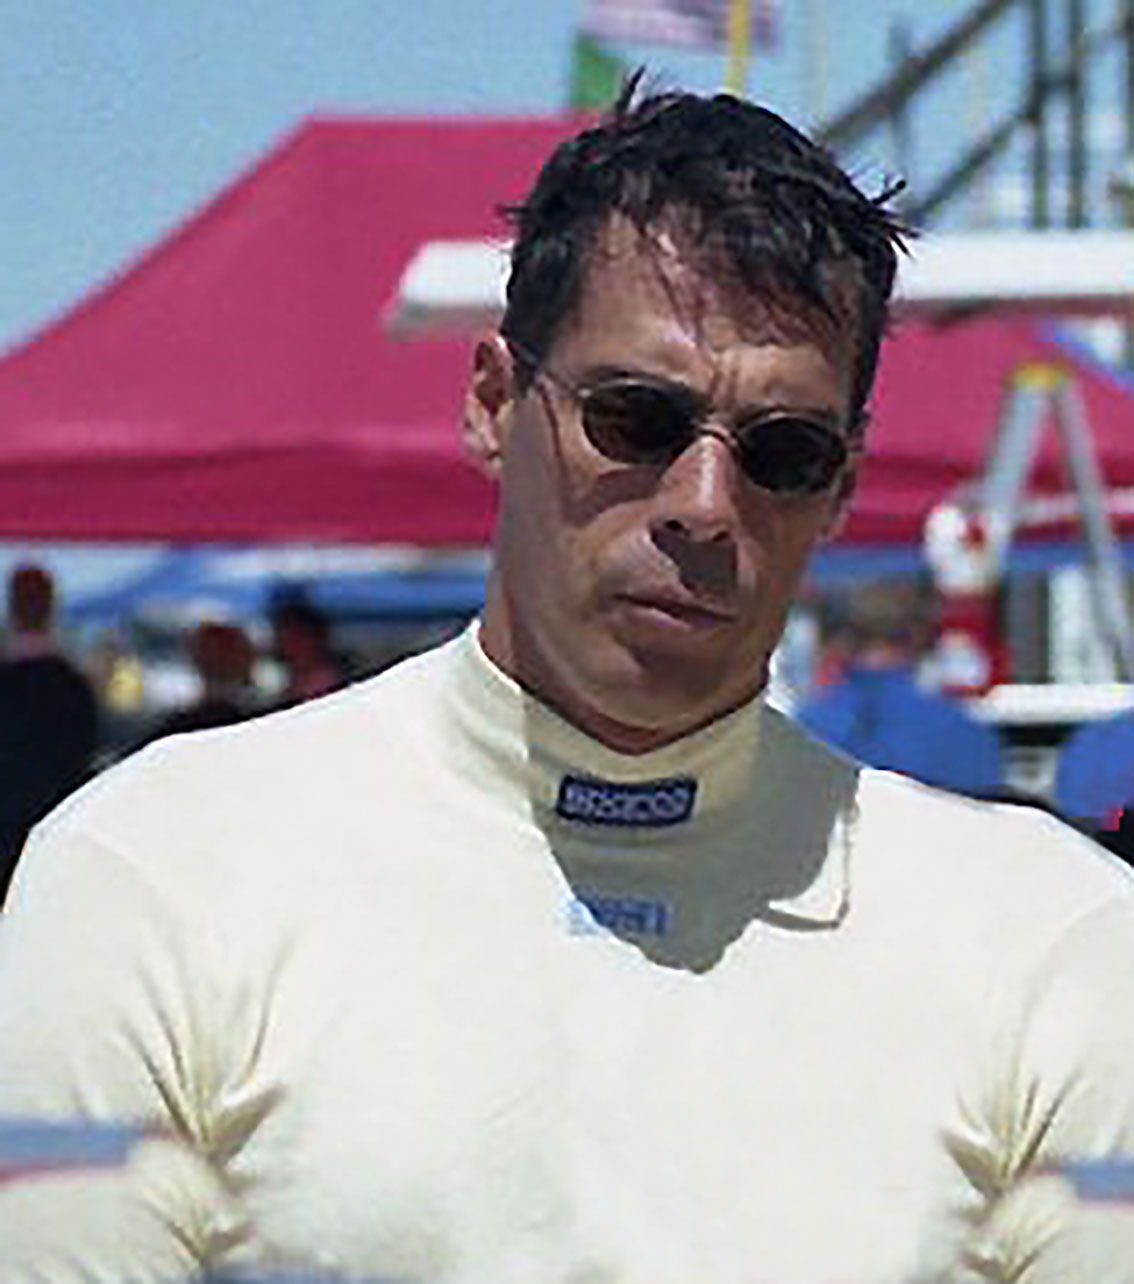 1997 John Paul Jr. Race Used PDM Racing IRL IndyCar Suit